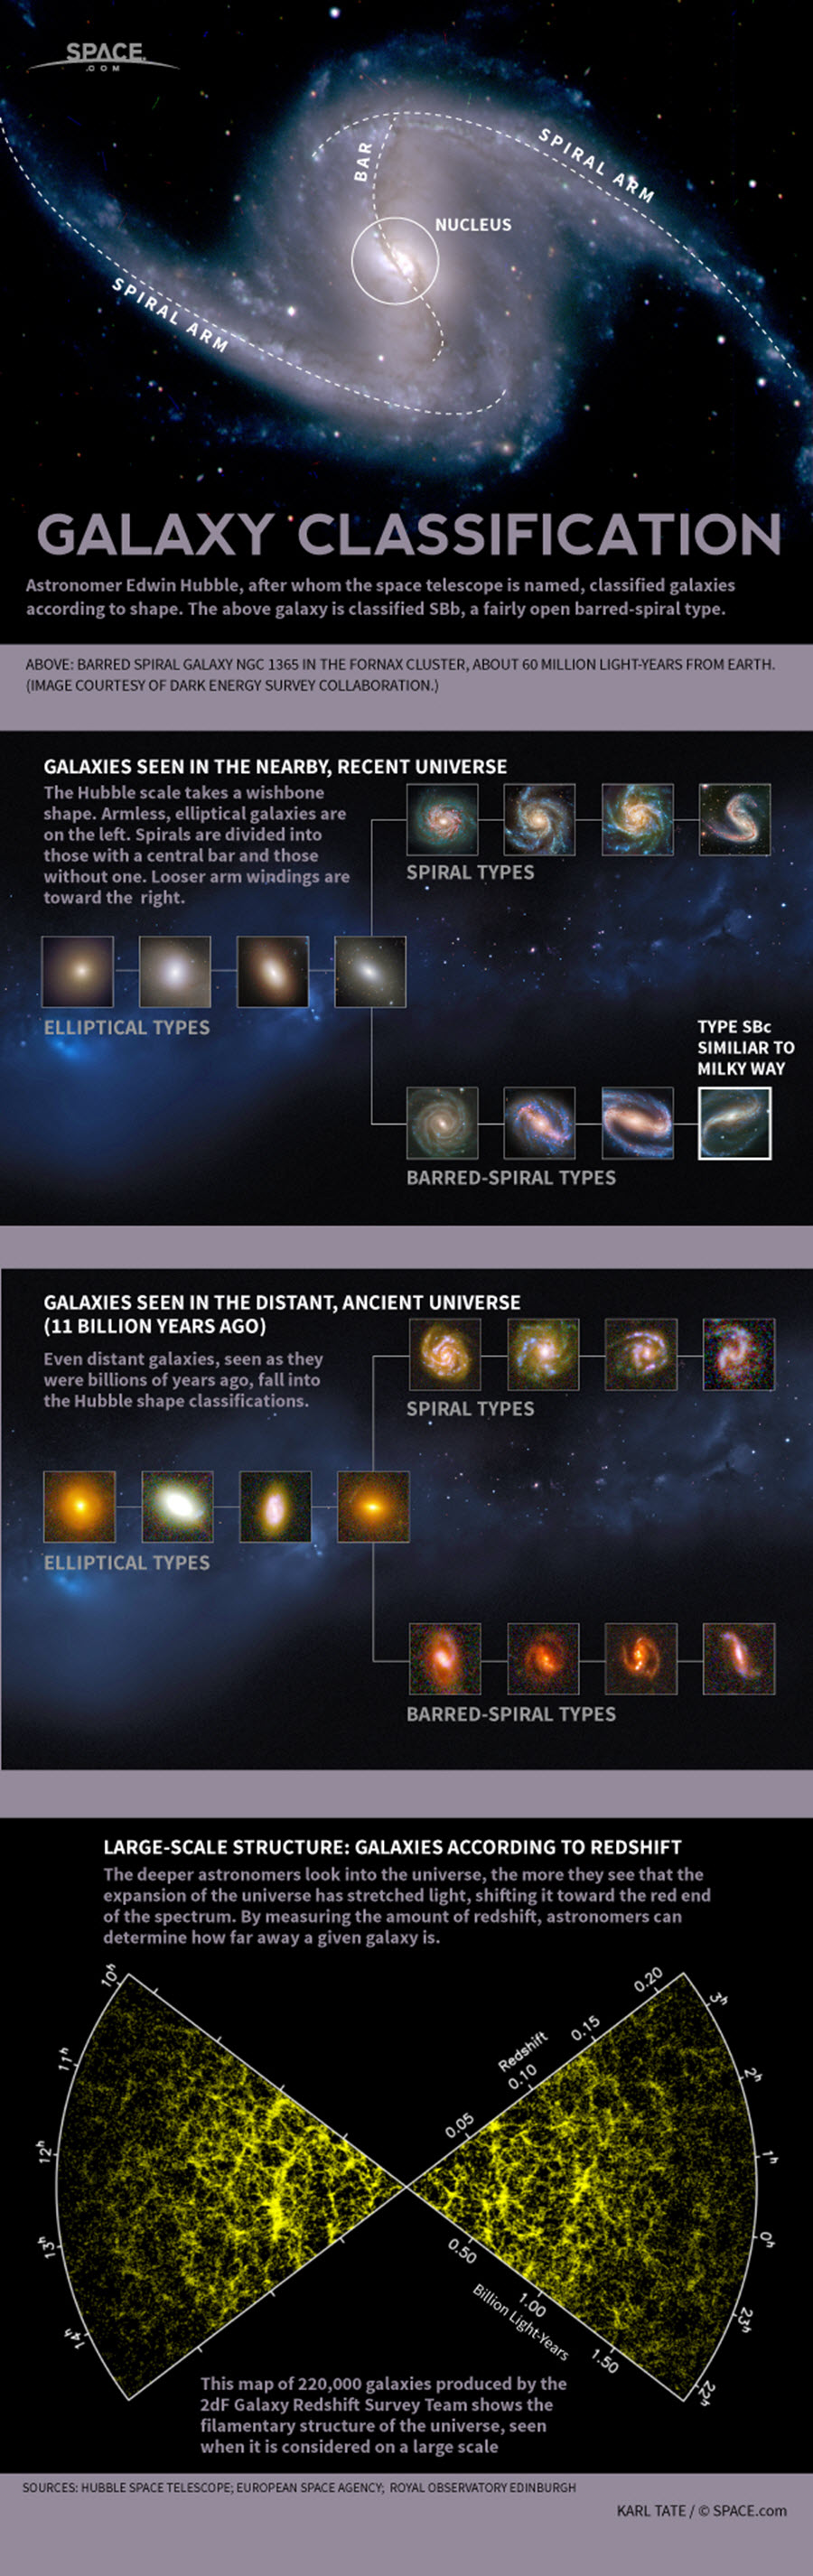 galaxies-distance-hubble-131021b-02